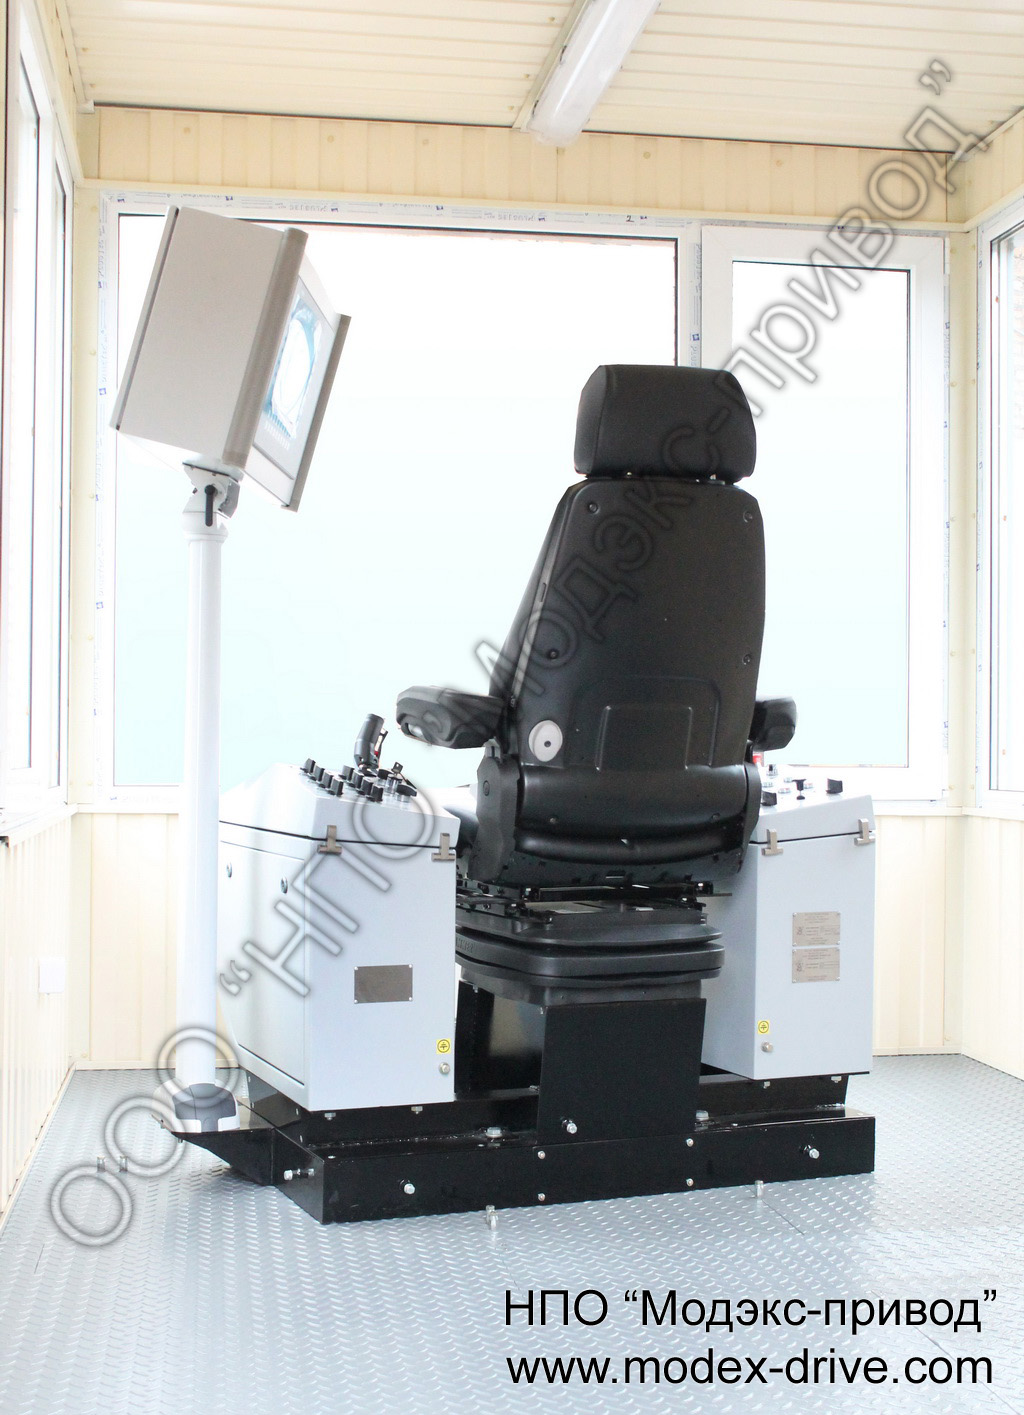 Кресло-пульт У1СН 300Д вид ссзади